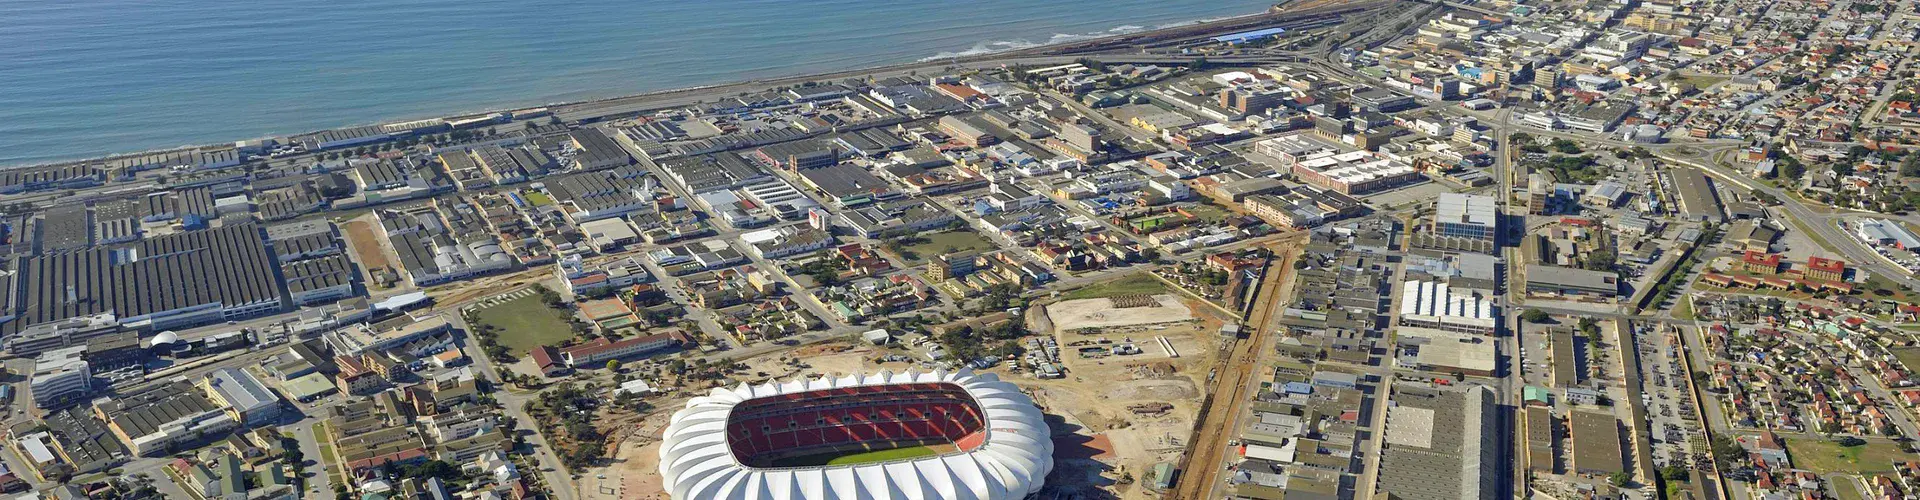 Port Elizabeth, South Africa (Credit: Ngrund/Panoramico)